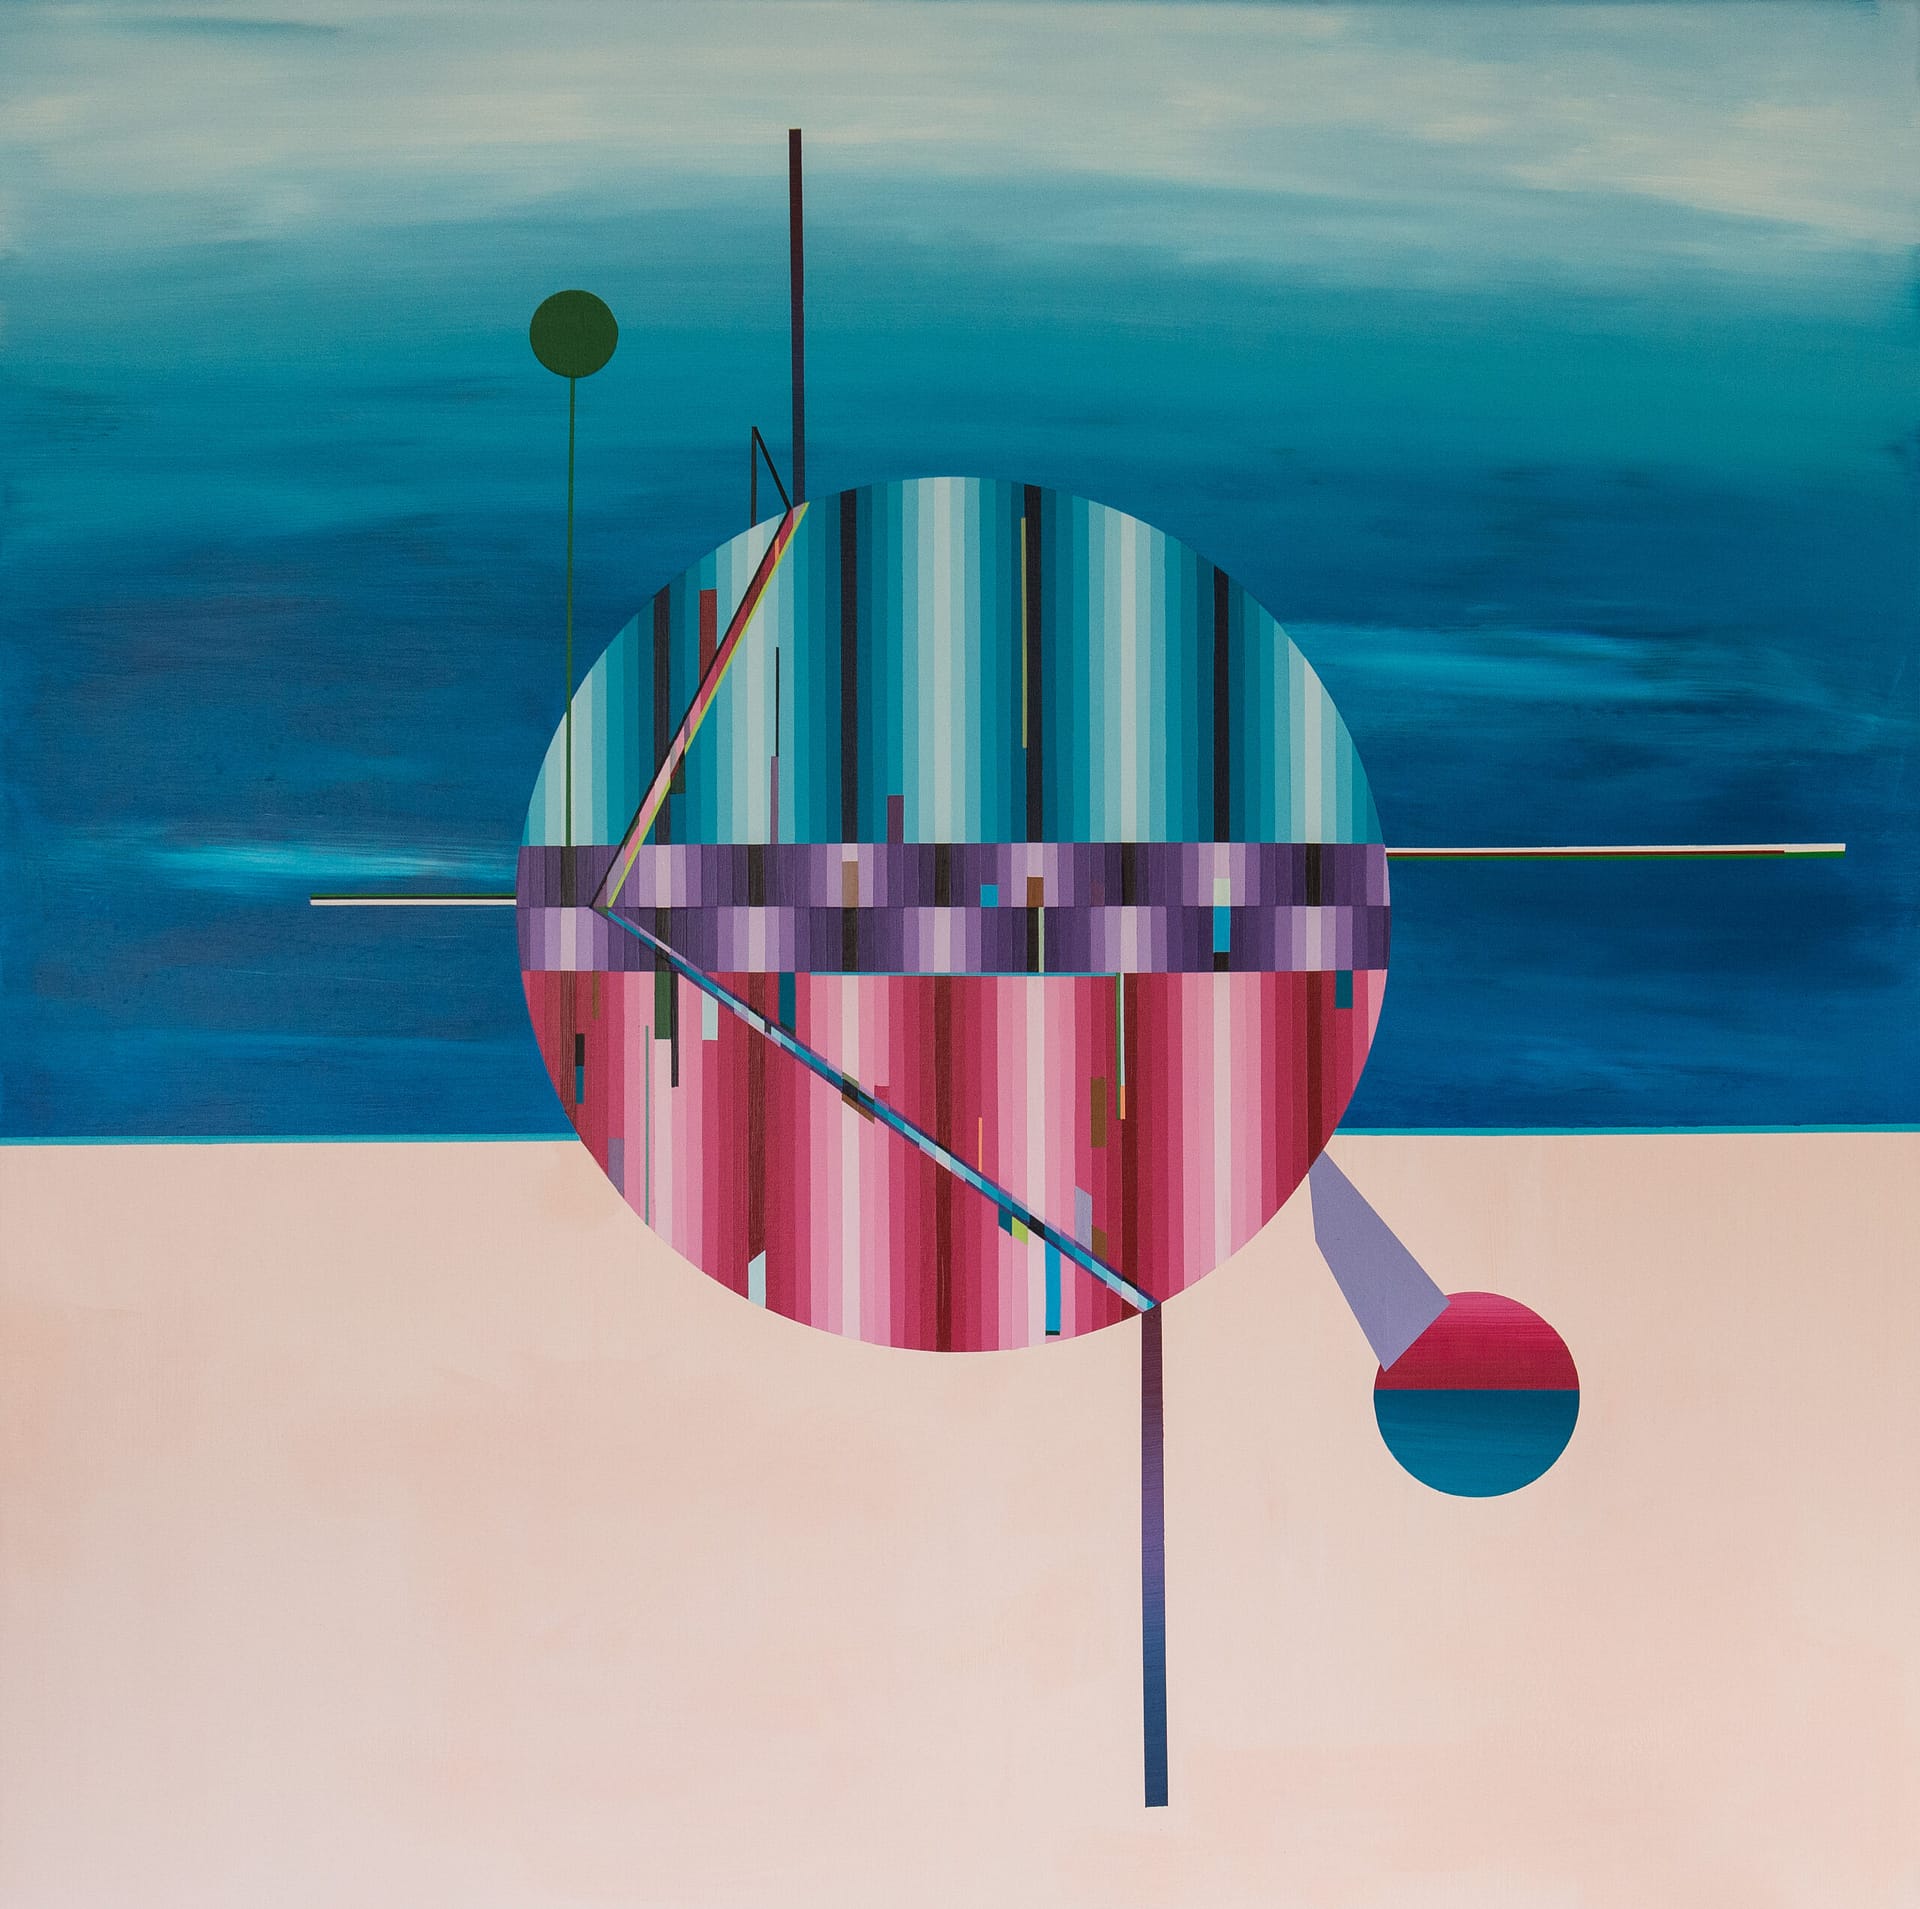 Floating ratio, 2020, 100 x 100 cm, acrylics on canvas - AVAILABLE